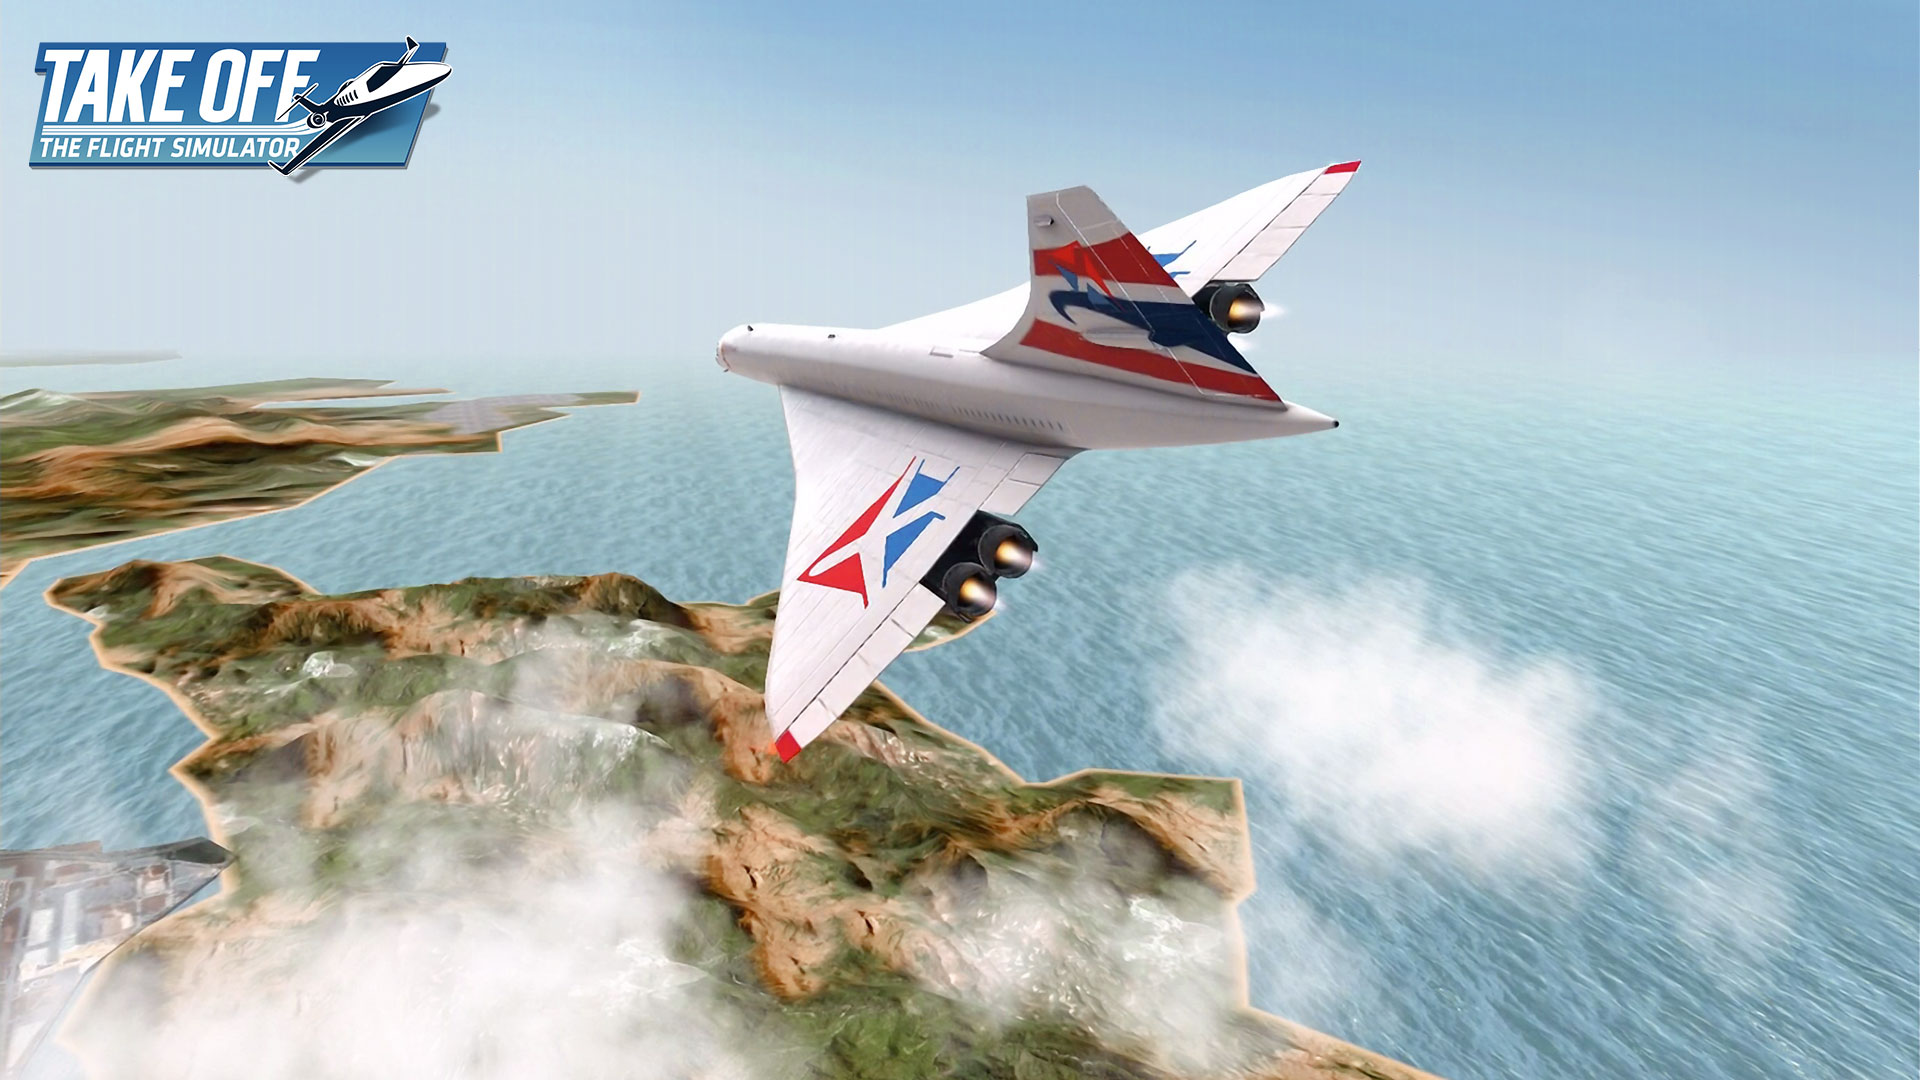 Take Off - The Flight Simulator - screenshot 6